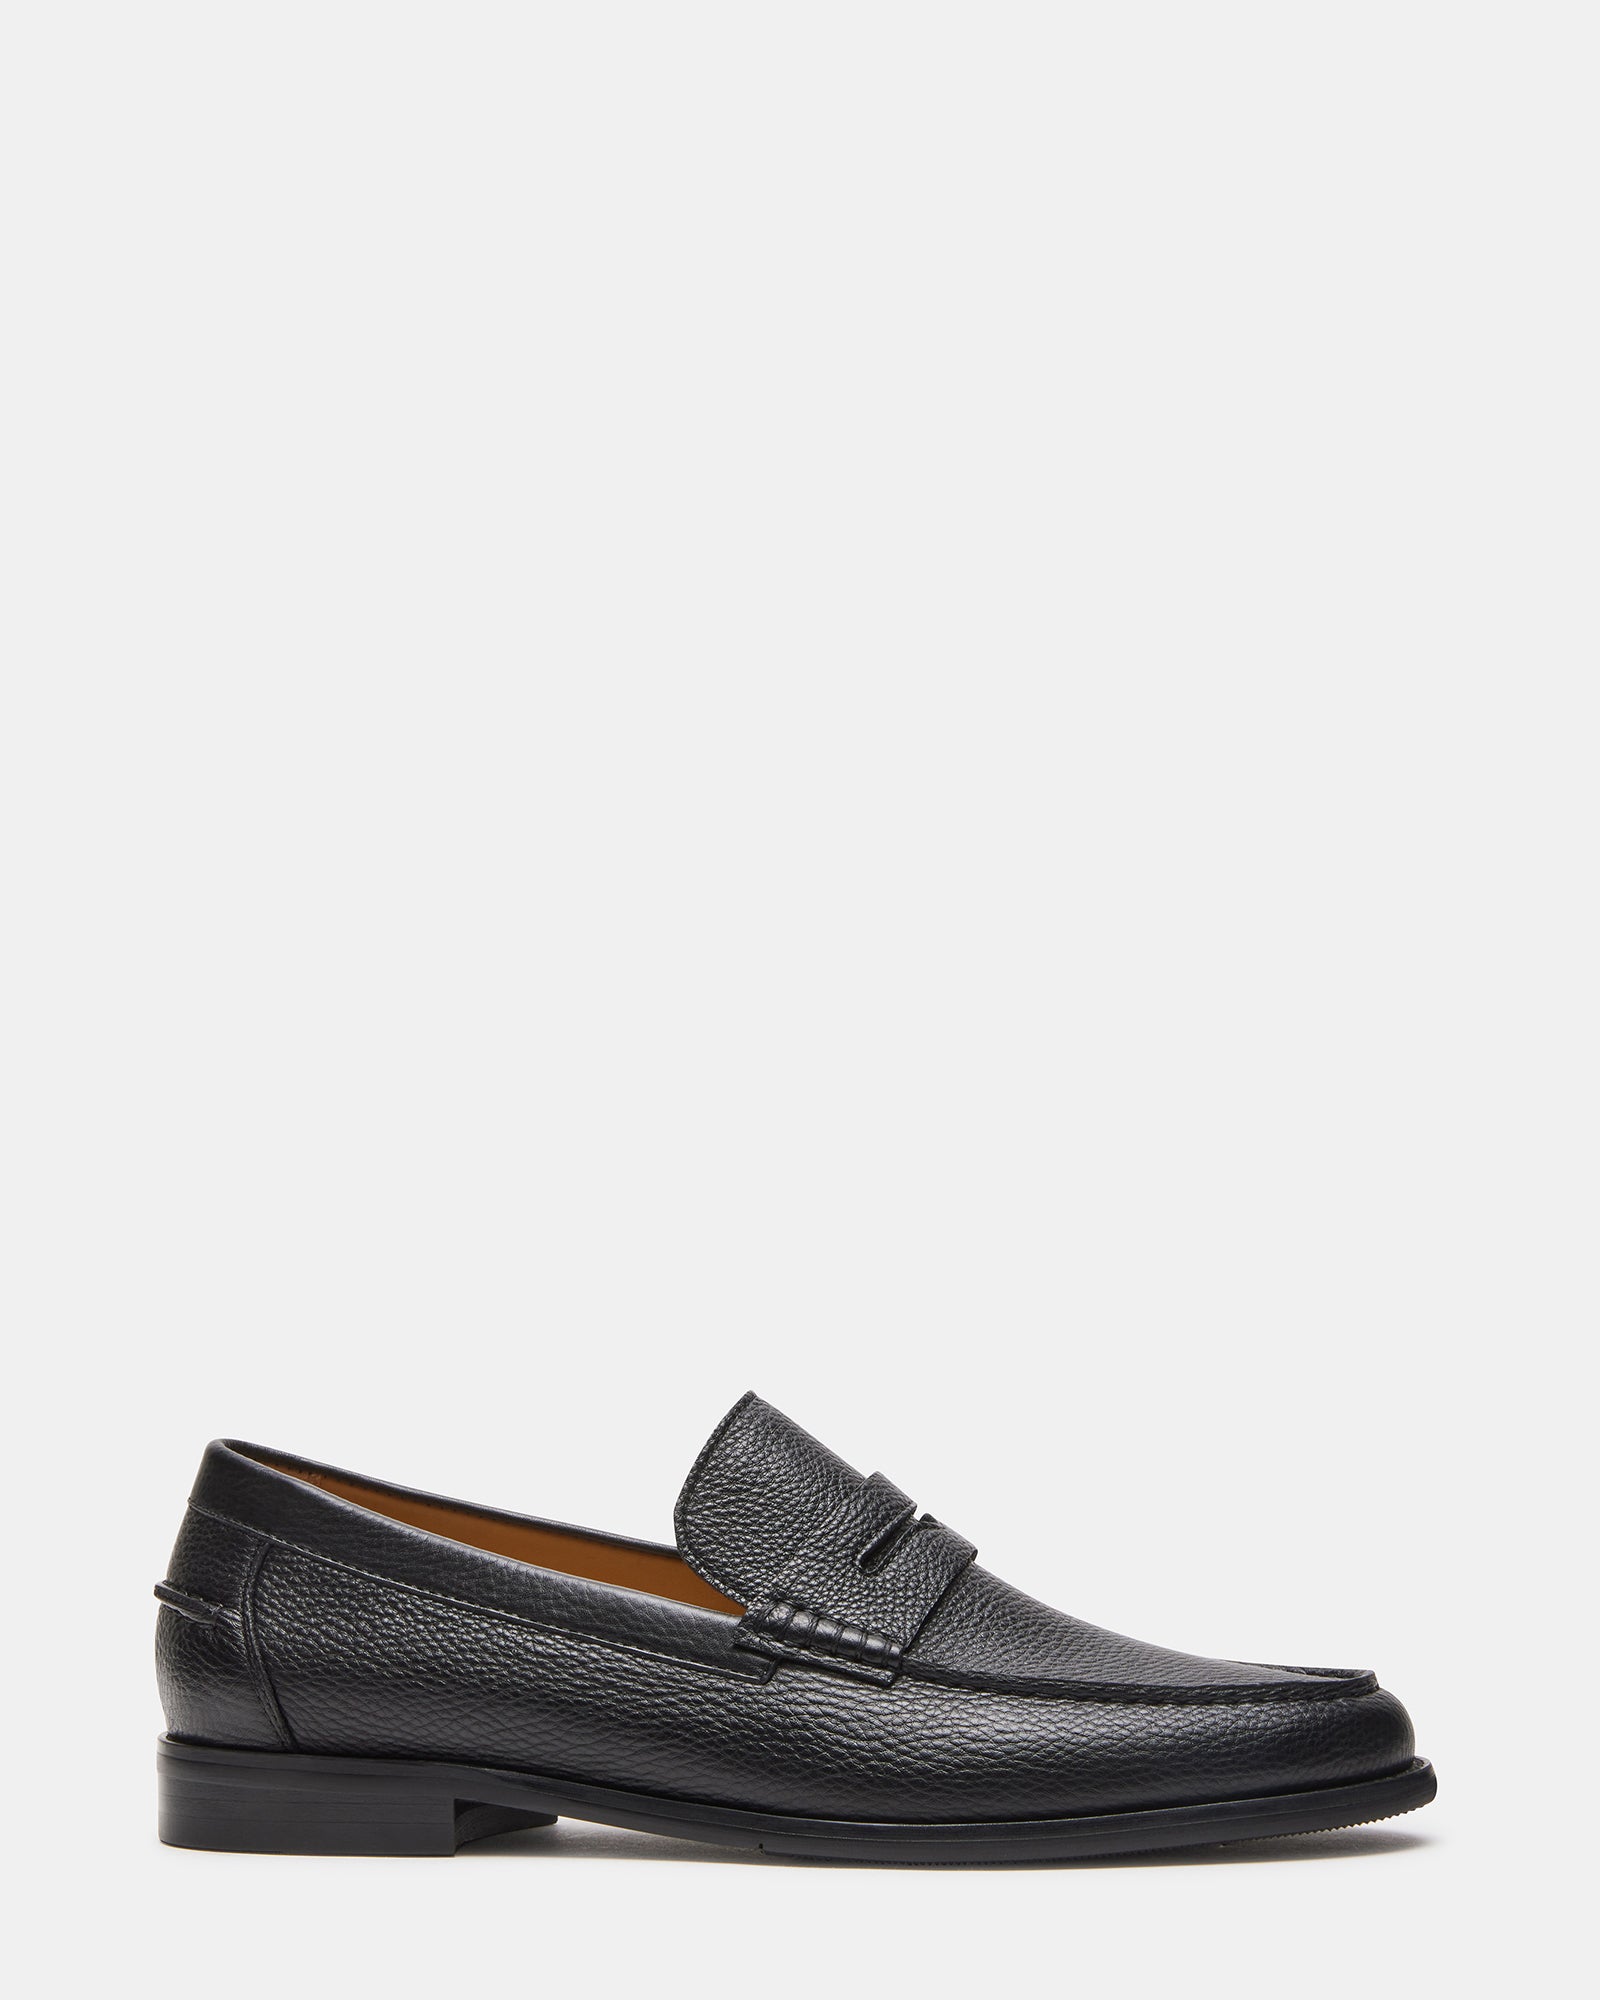 ALONSO Black Leather Slip-On Loafer | Men's Casual Loafers – Steve Madden